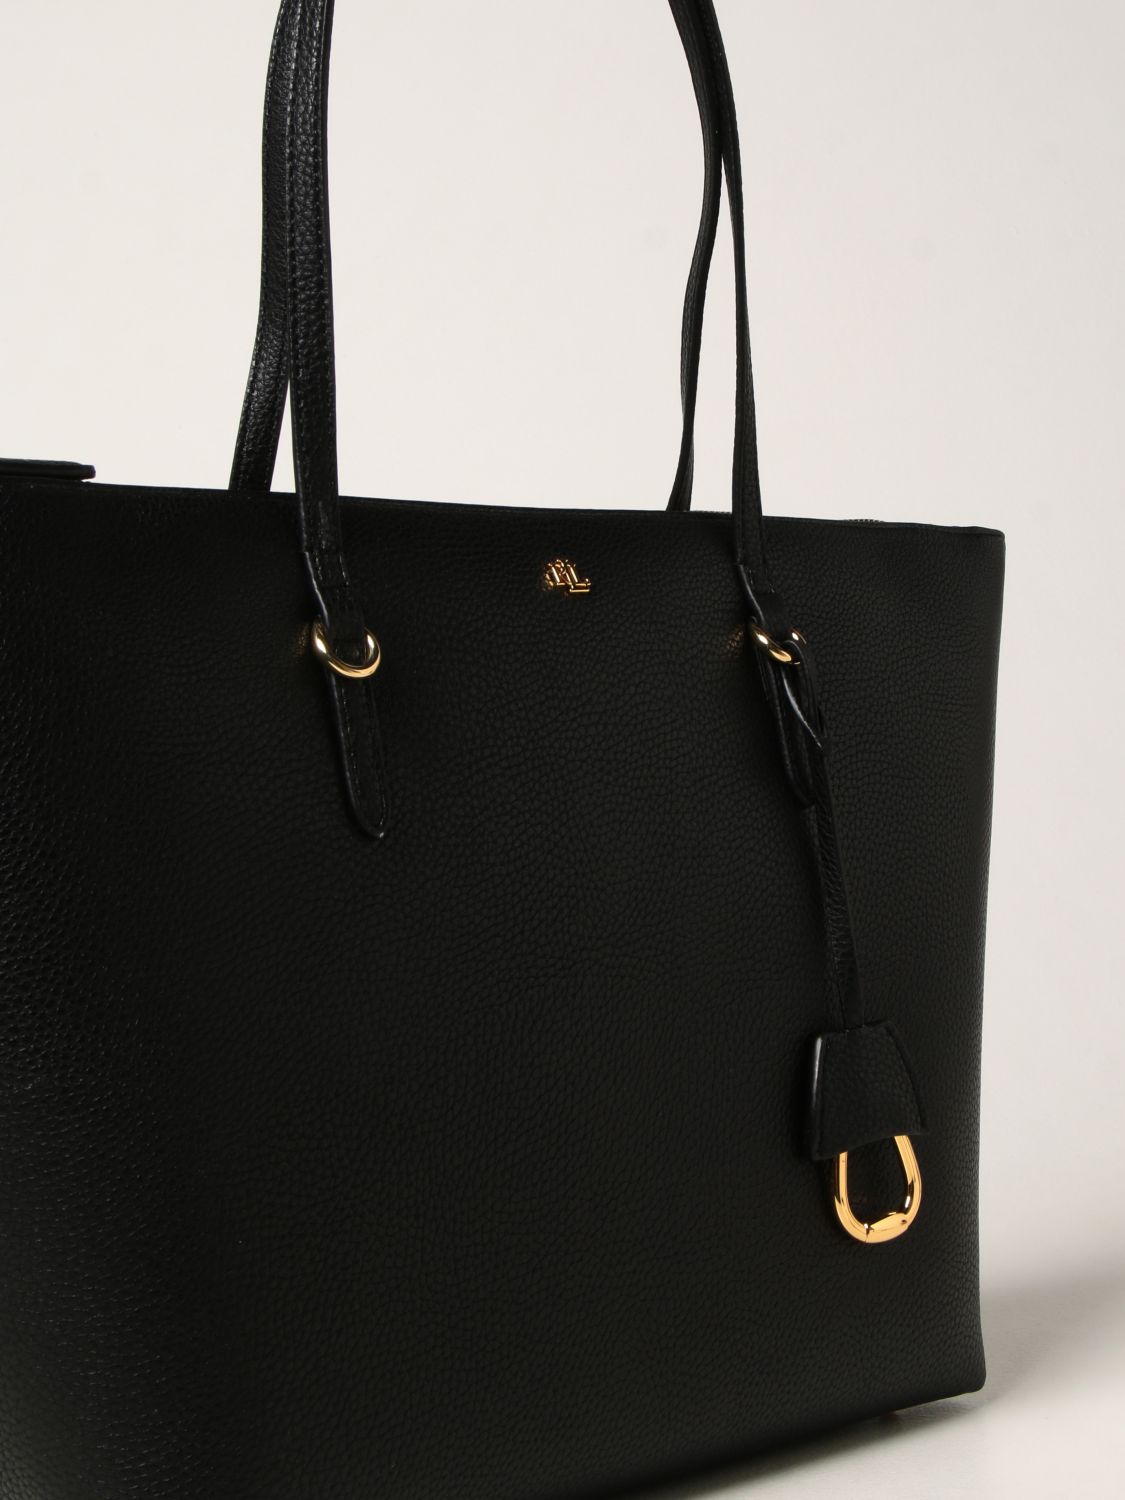 Ralph Lauren Leather Tote Bag - Black Totes, Handbags - WYG108335